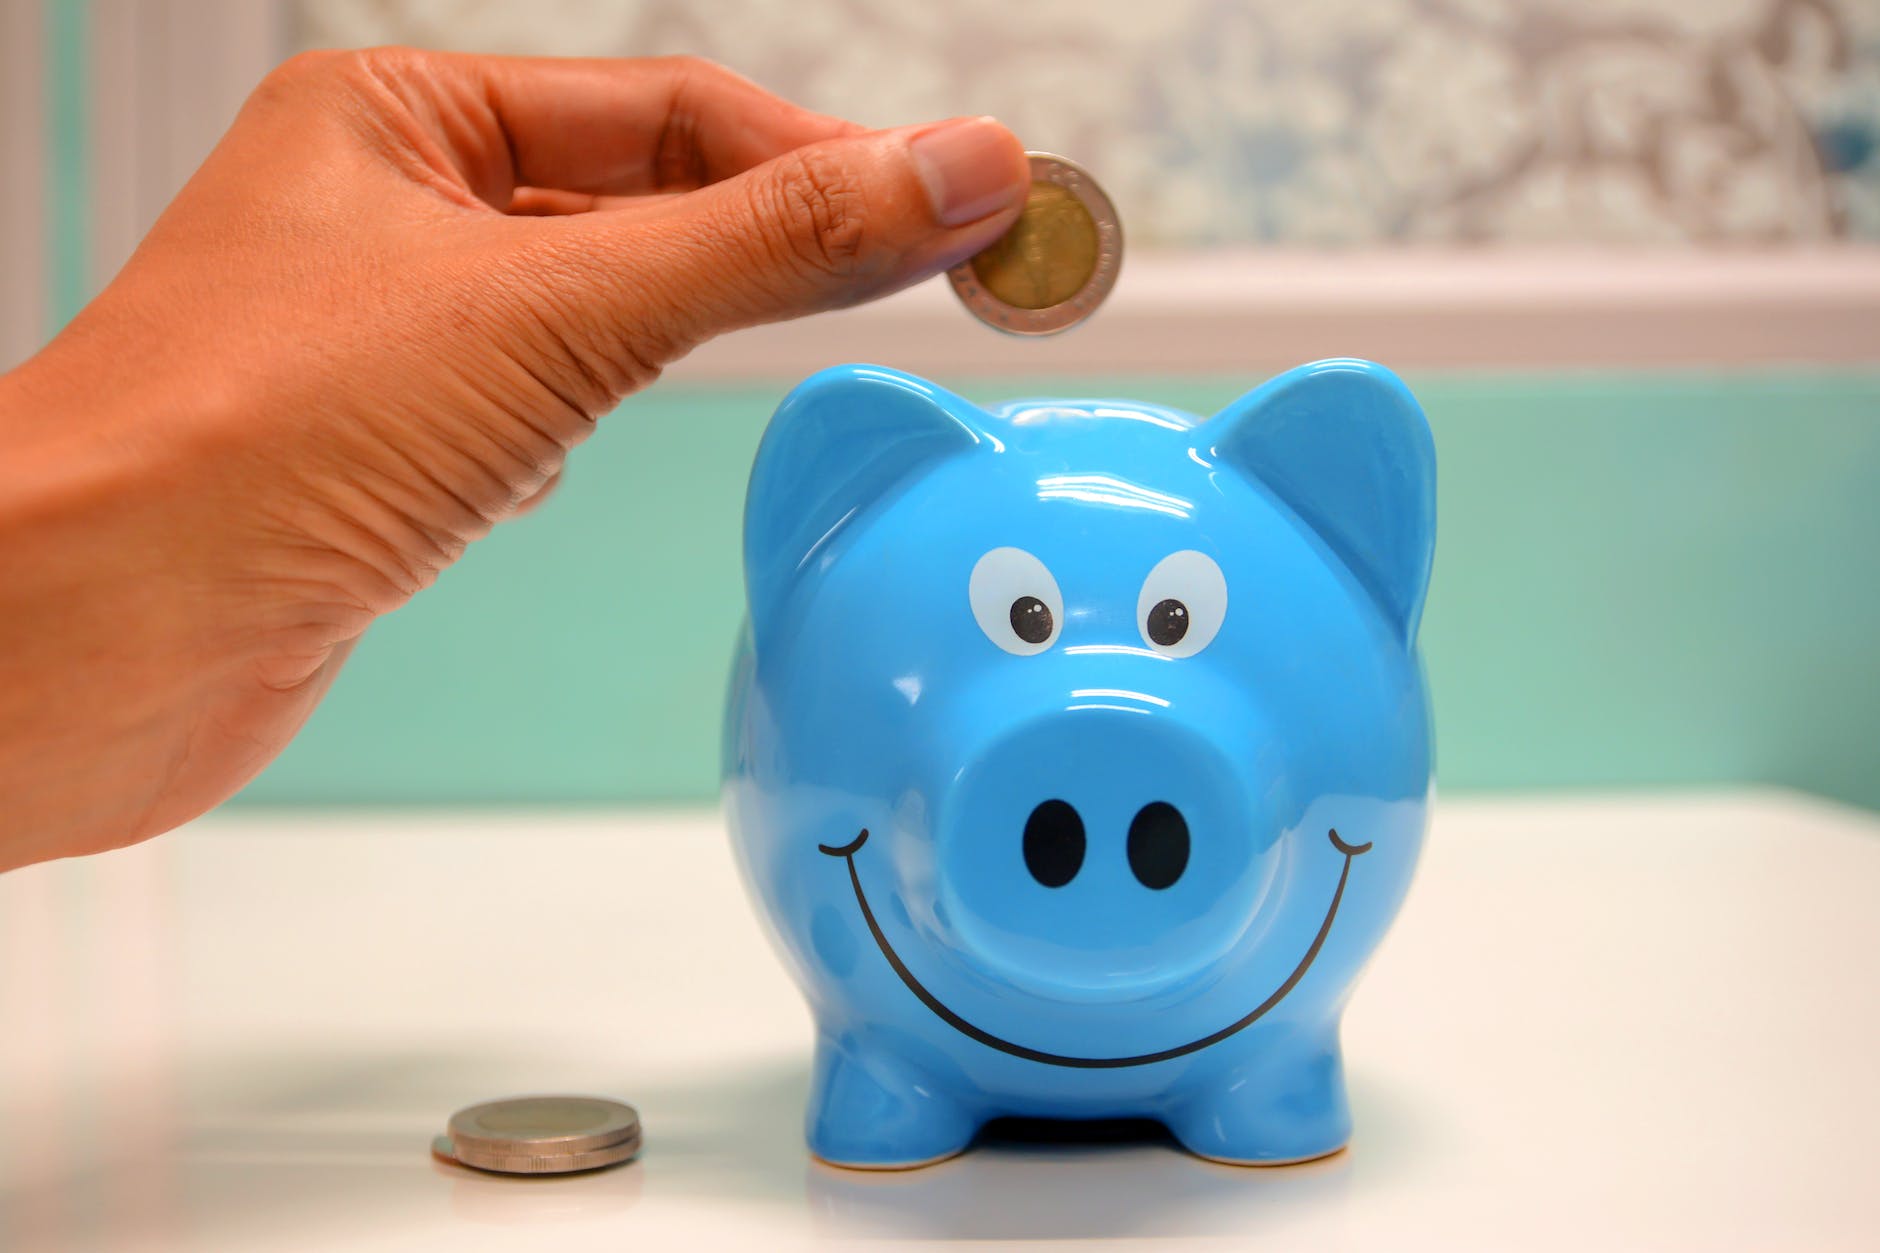 A person putting money into a blue piggy bank.